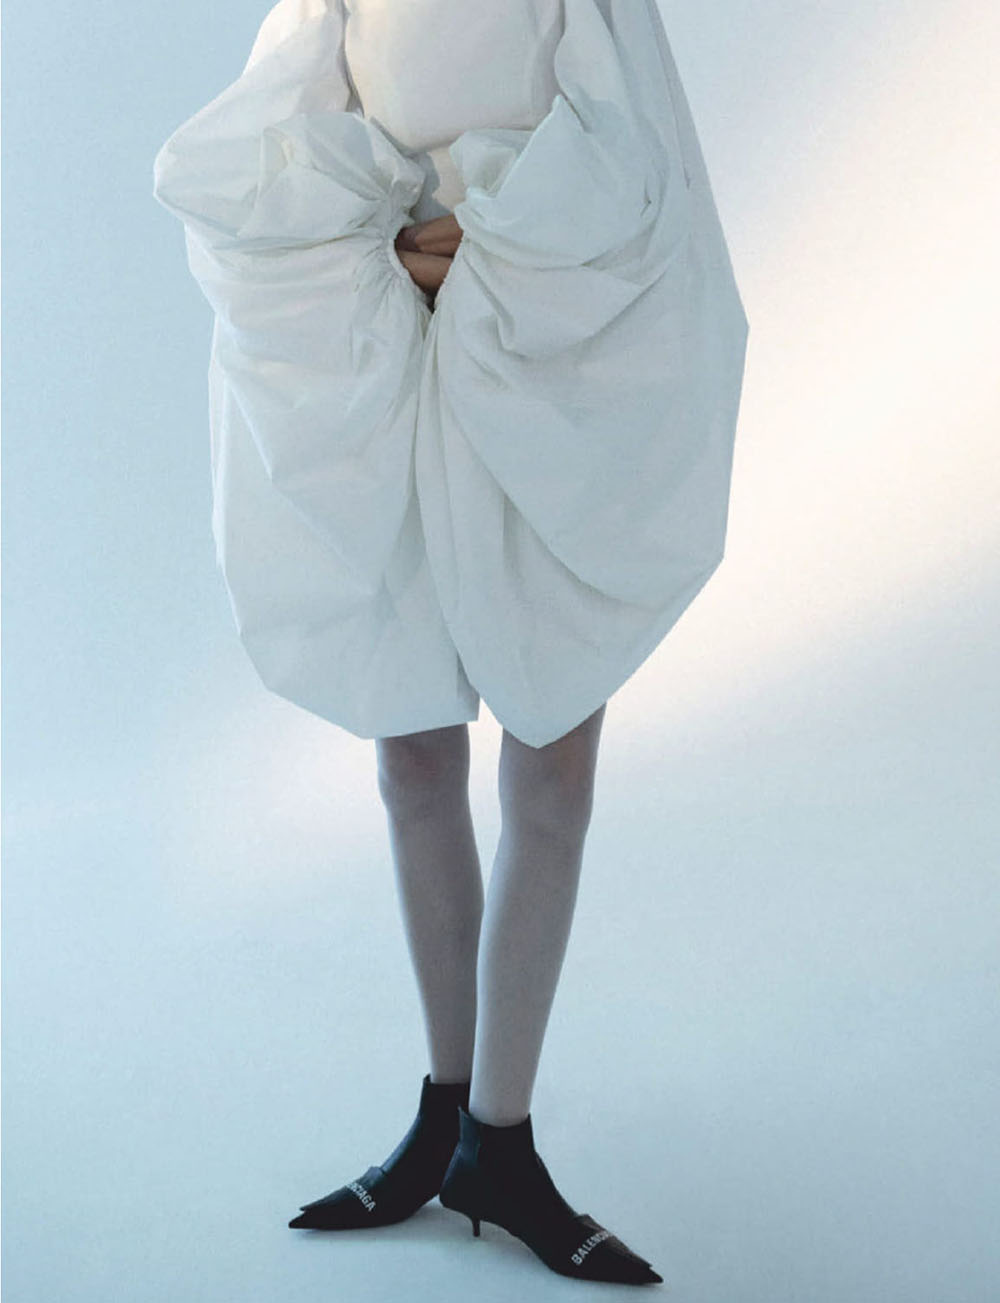 Kätlin Aas by Luca Meneghel for Vogue Taiwan January 2020